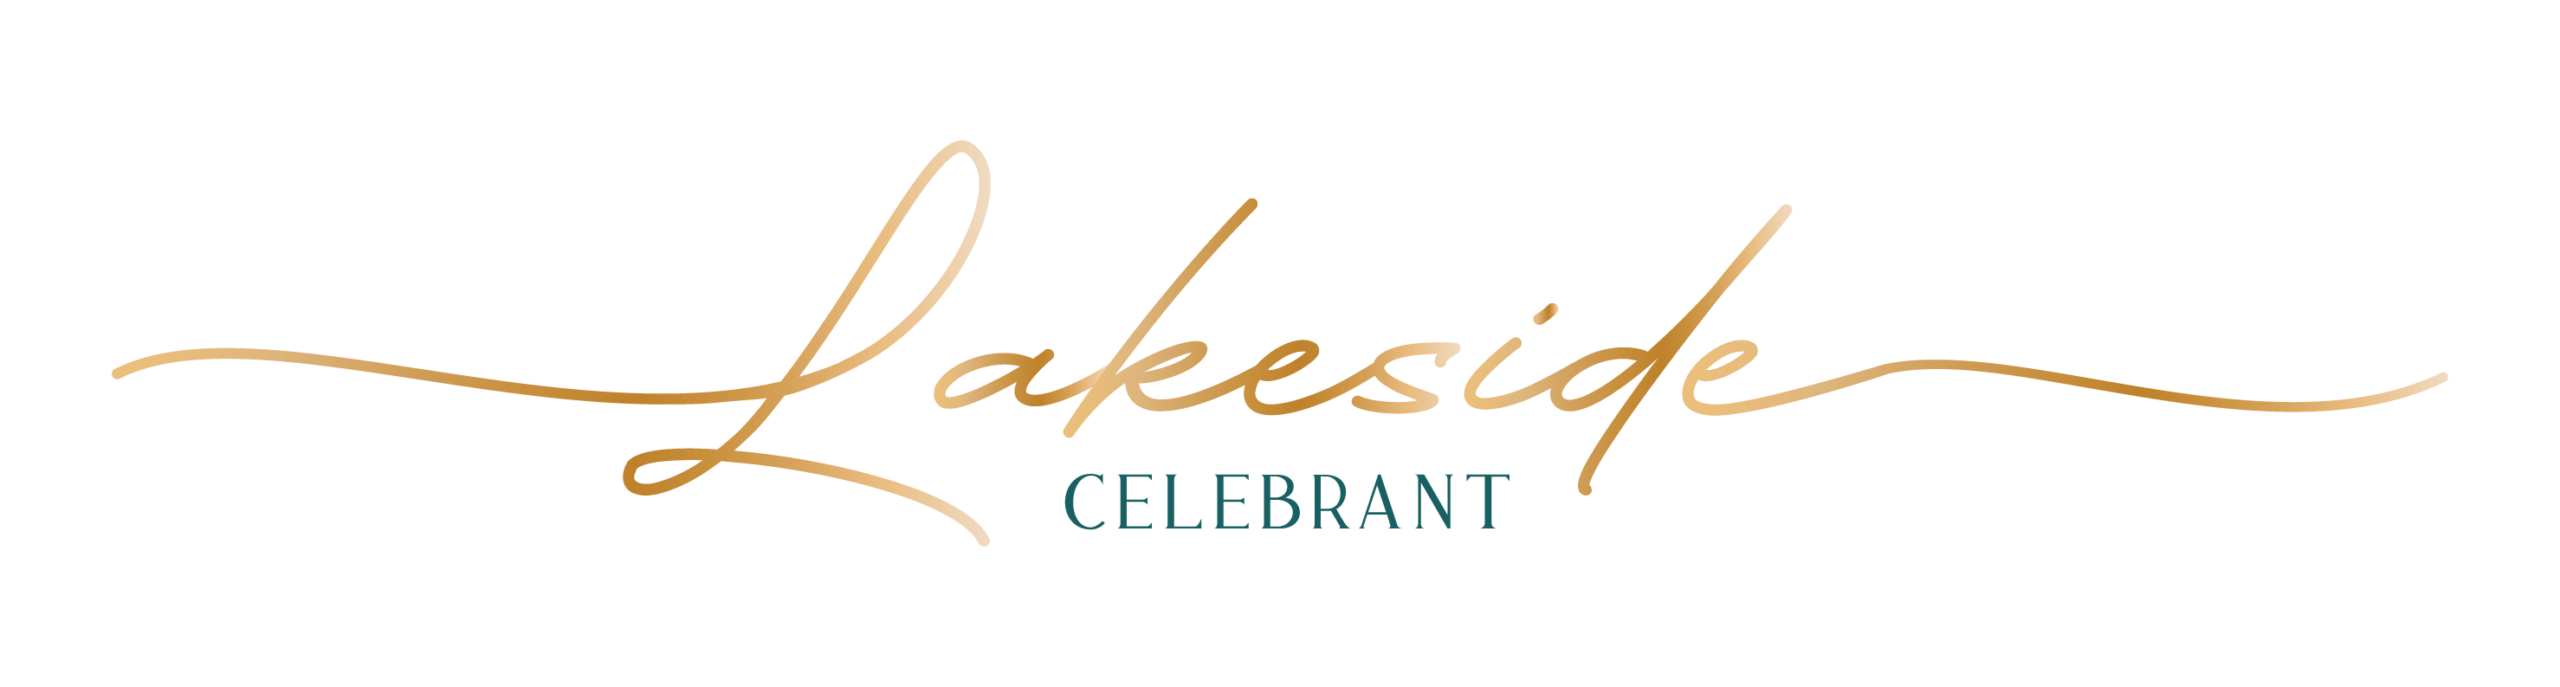 Lakeside Celebrant Logo - Gold - Dark blue